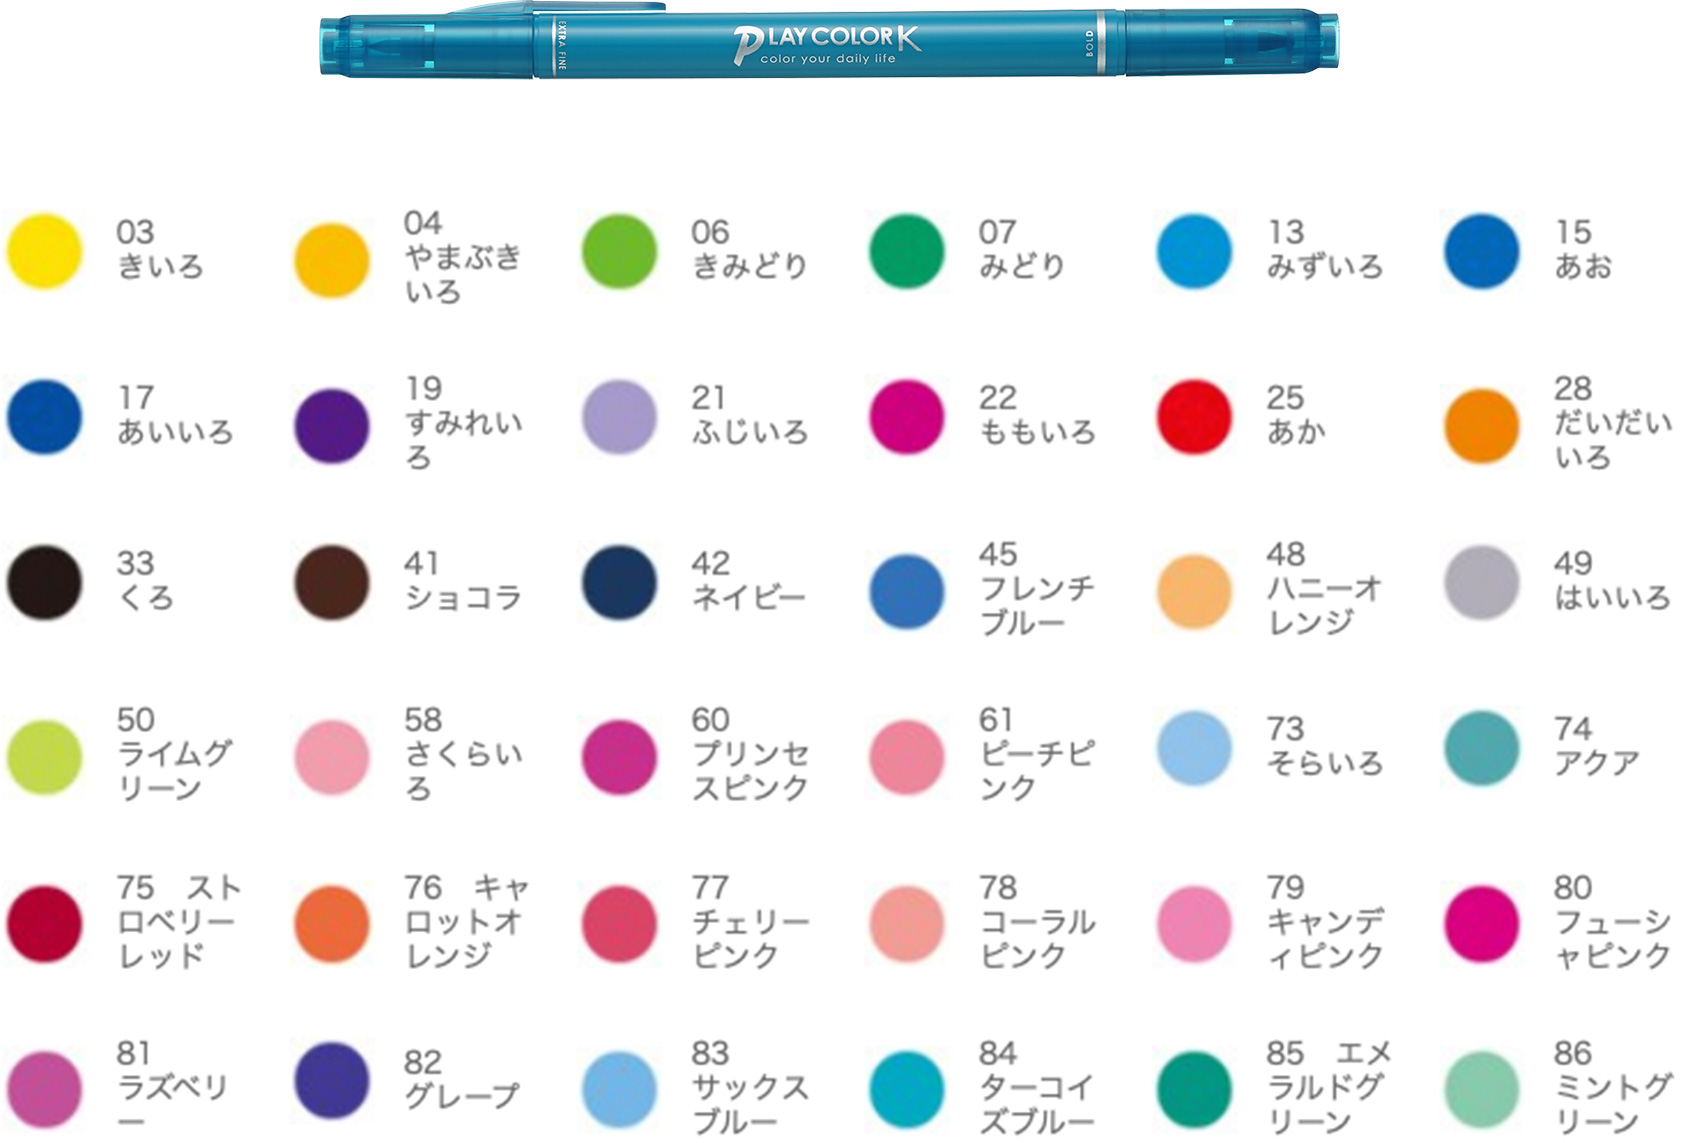 Tombow Pencil aqueous pen play color K 36 colors GCF-013 F/S 